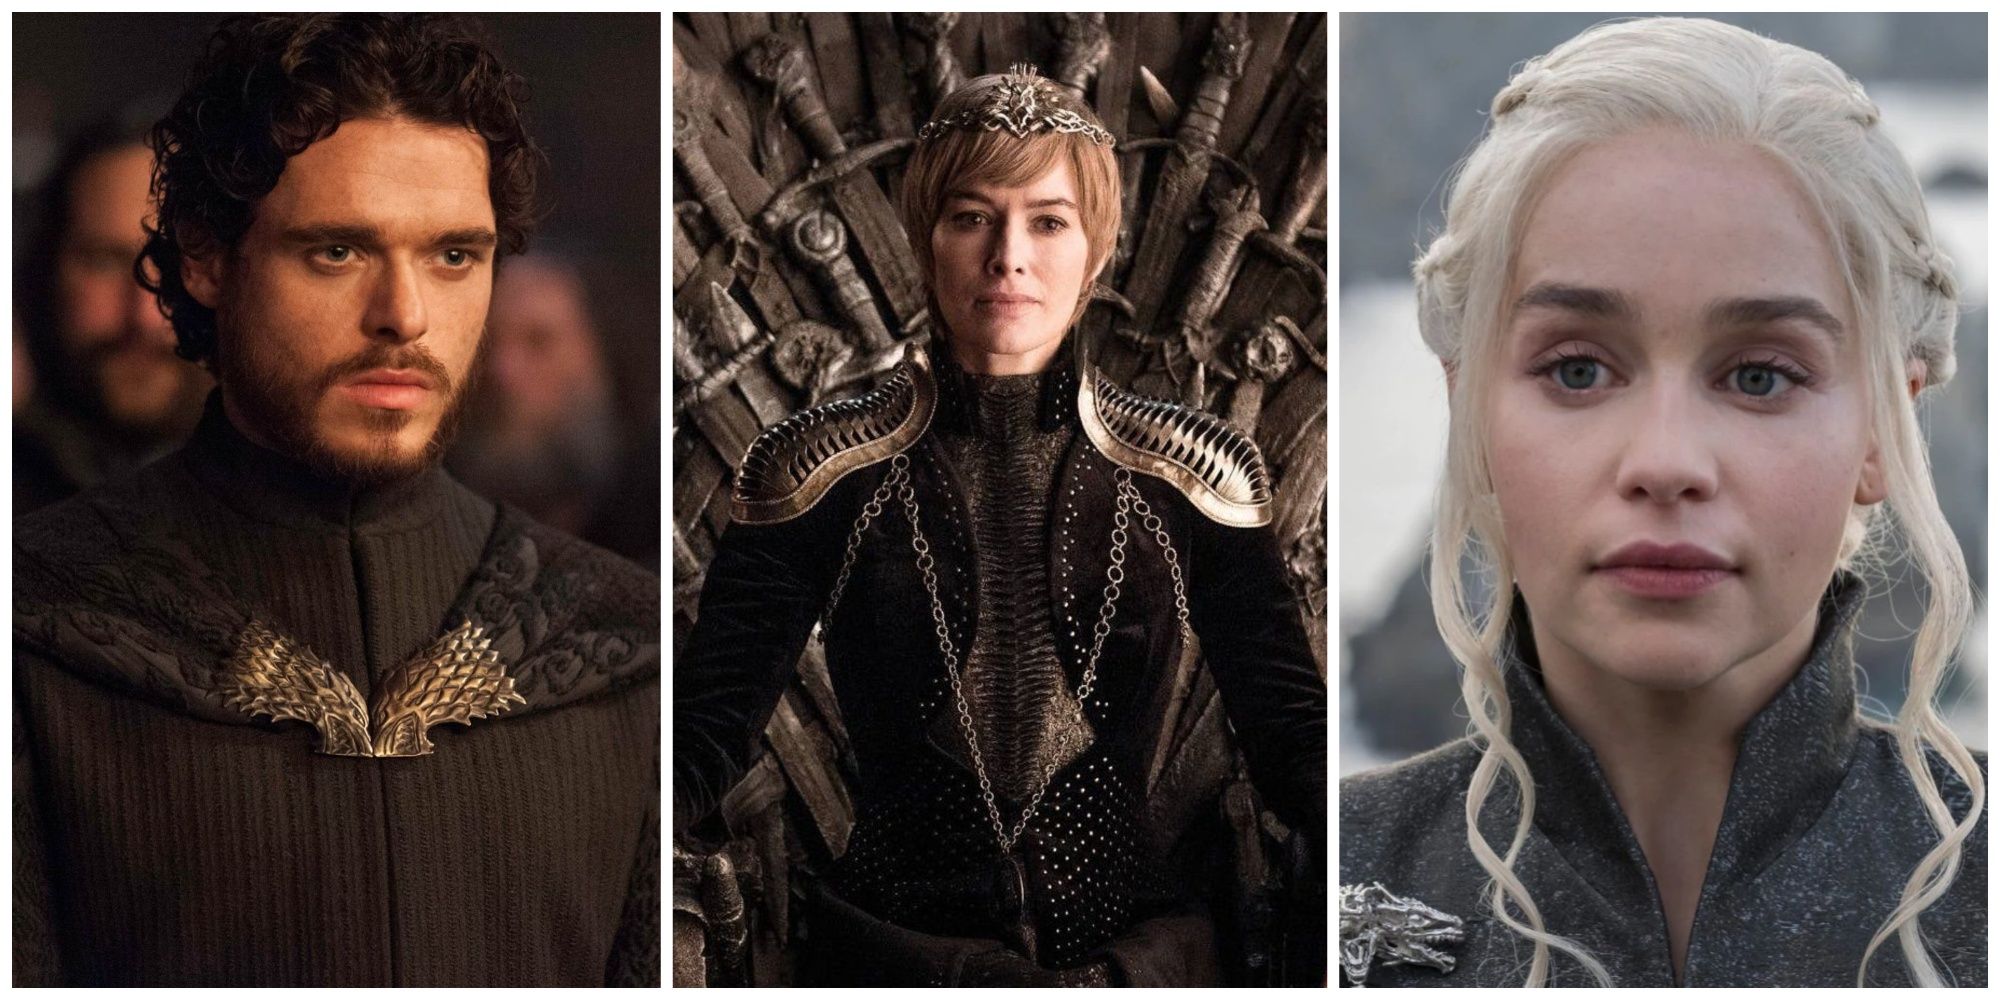 Split image showing Robb Stark, Cersei, and Daenerys